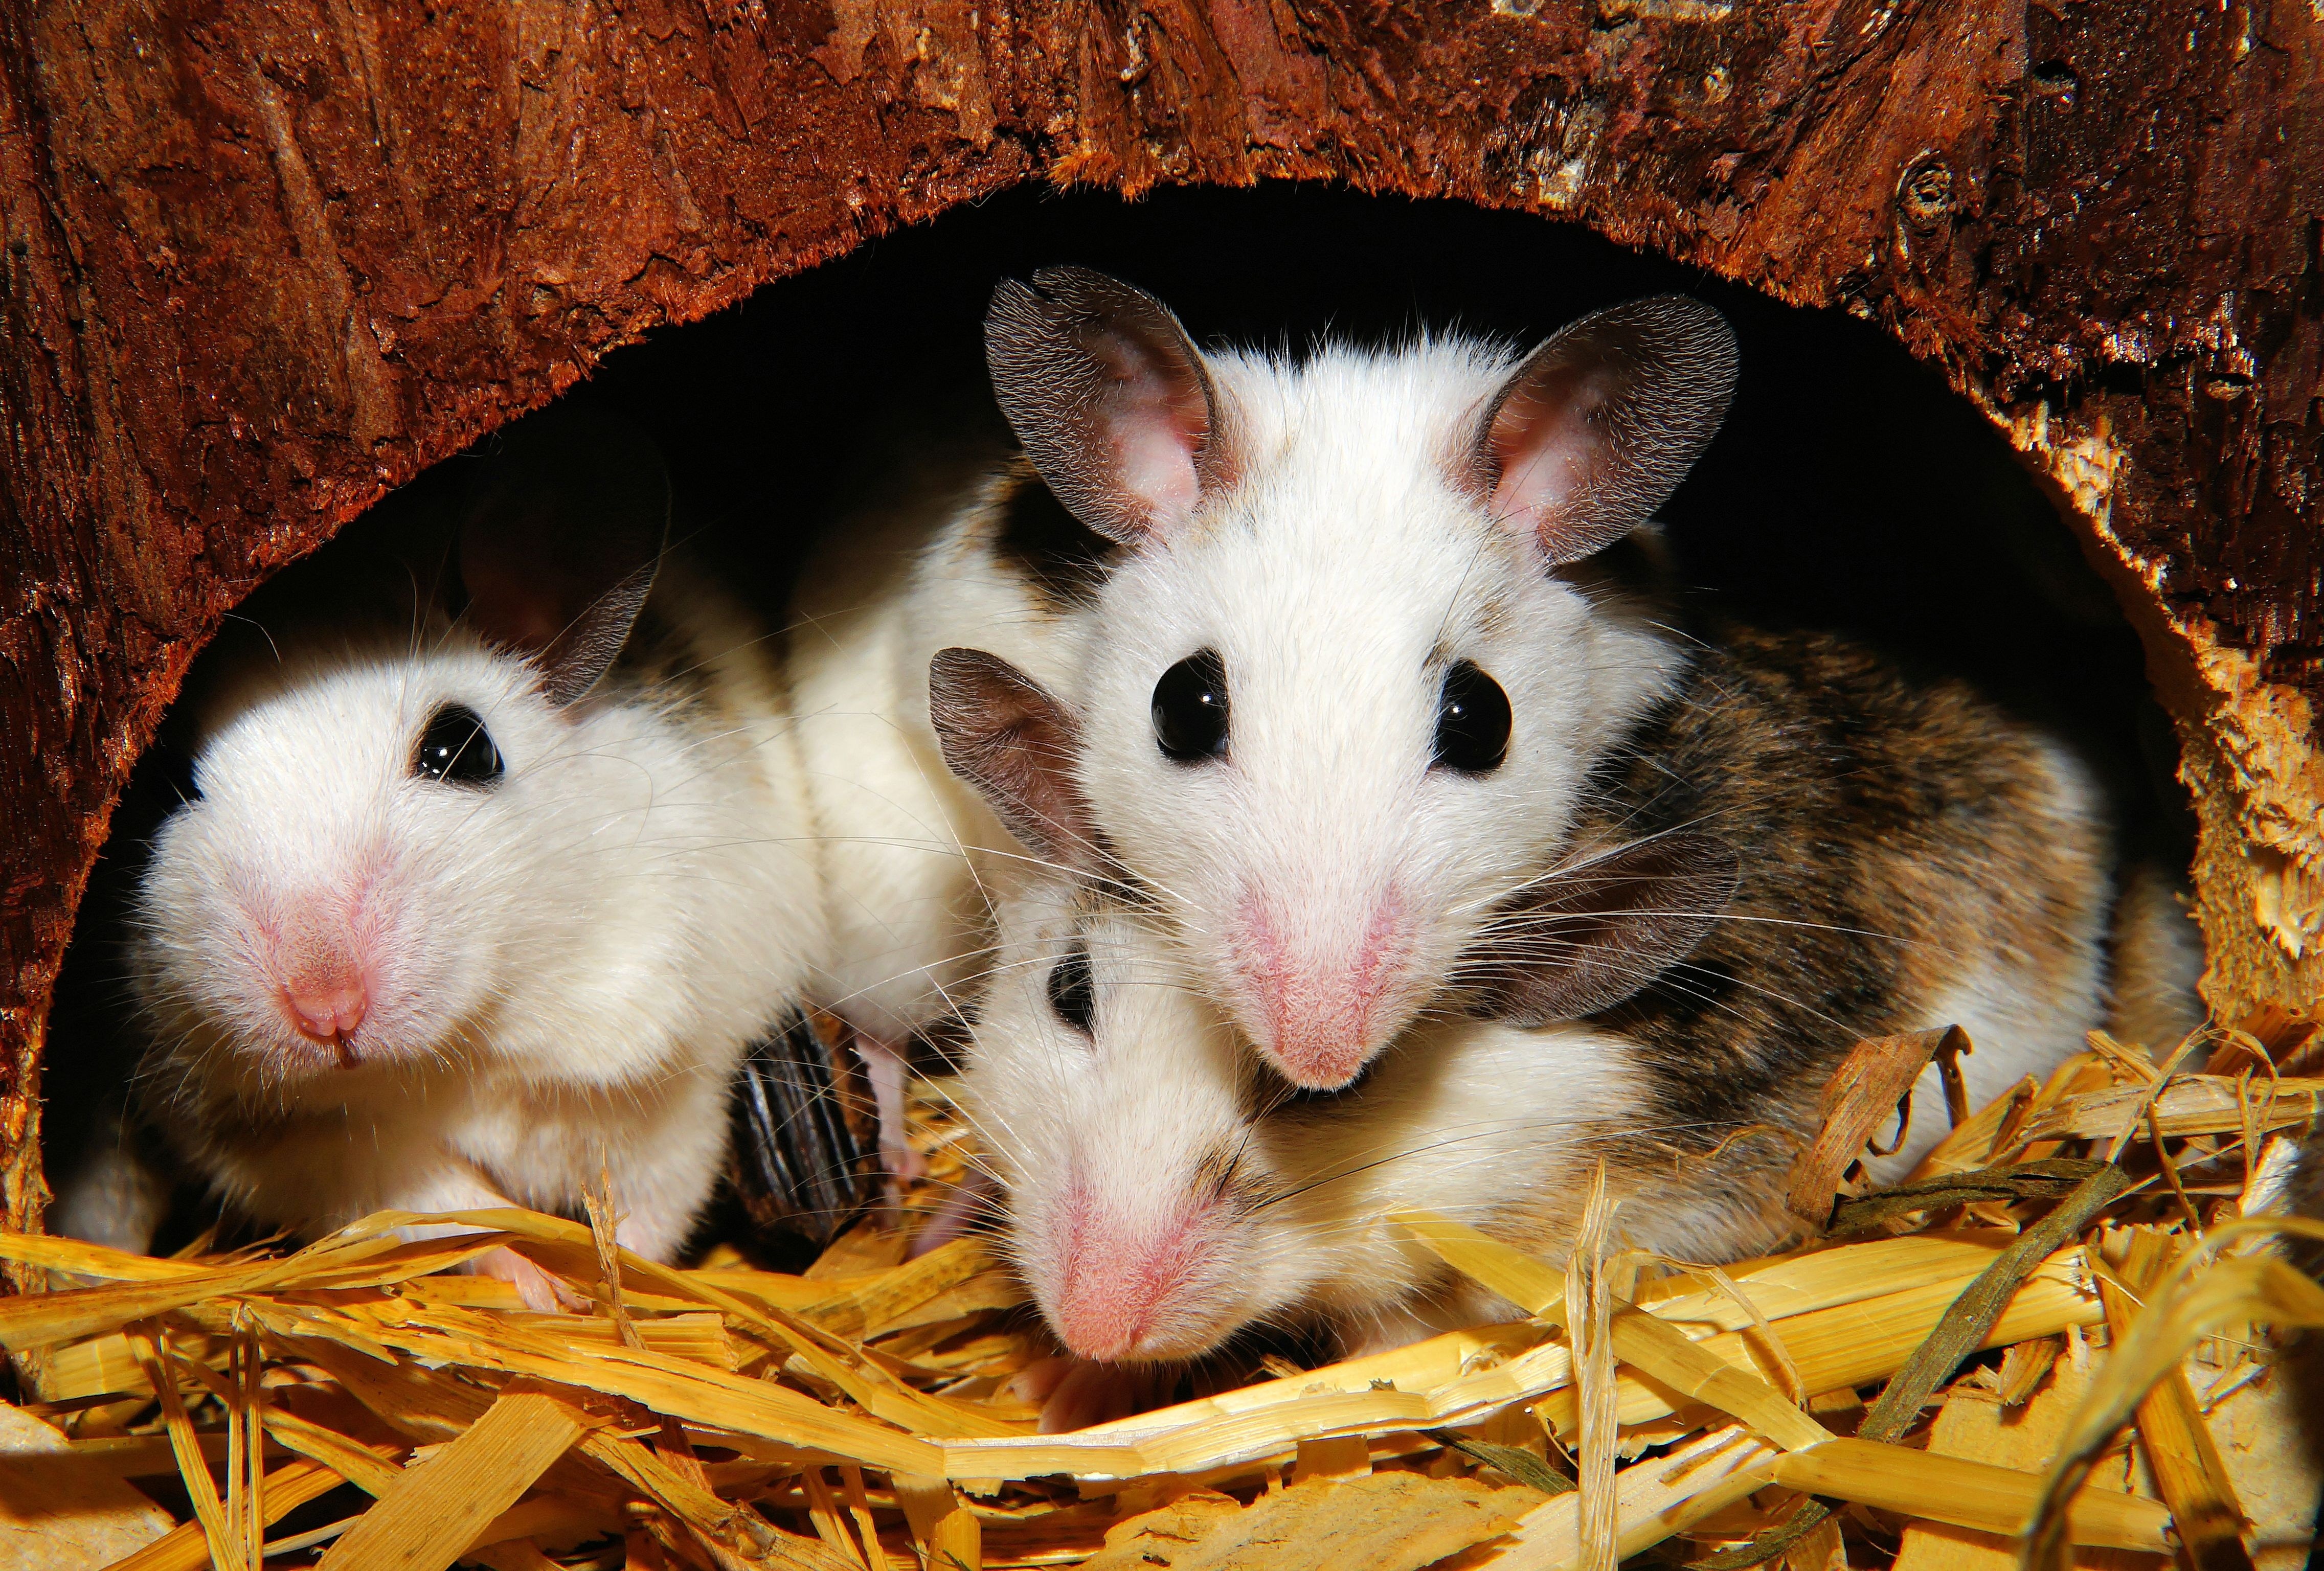 3 white tan and black mice